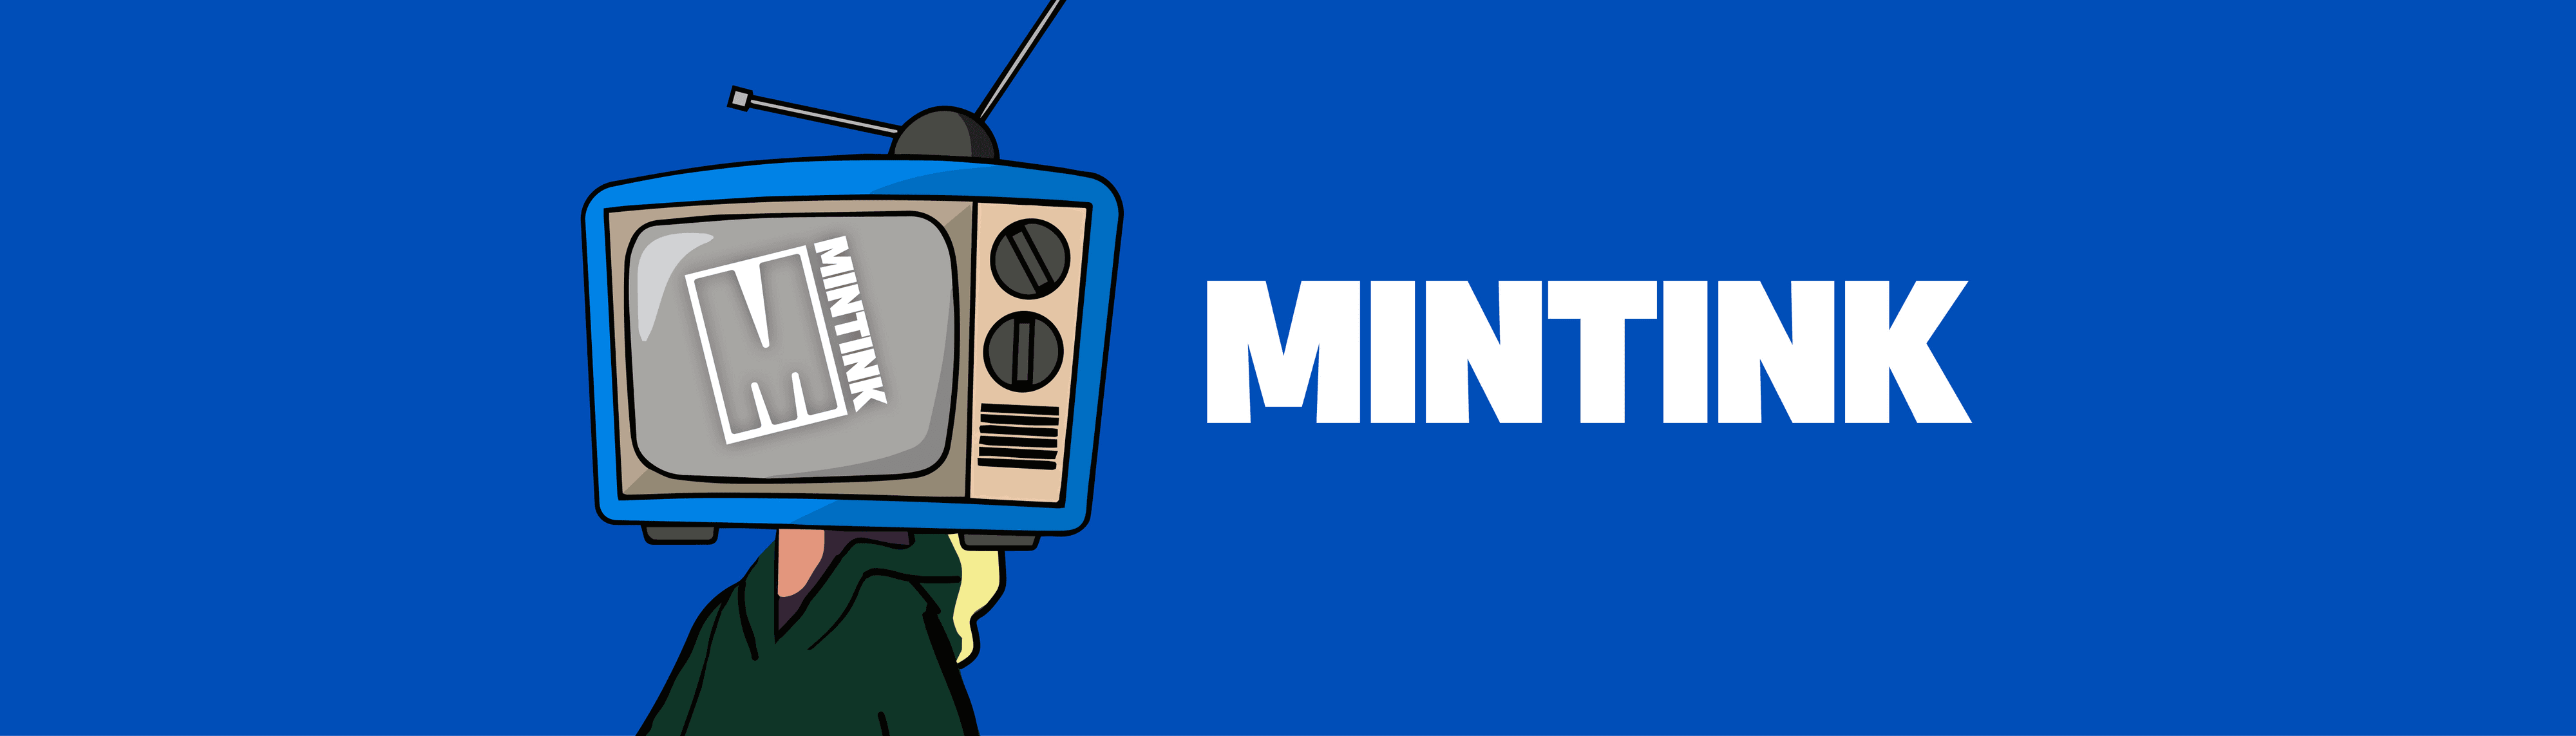 Mintink banner